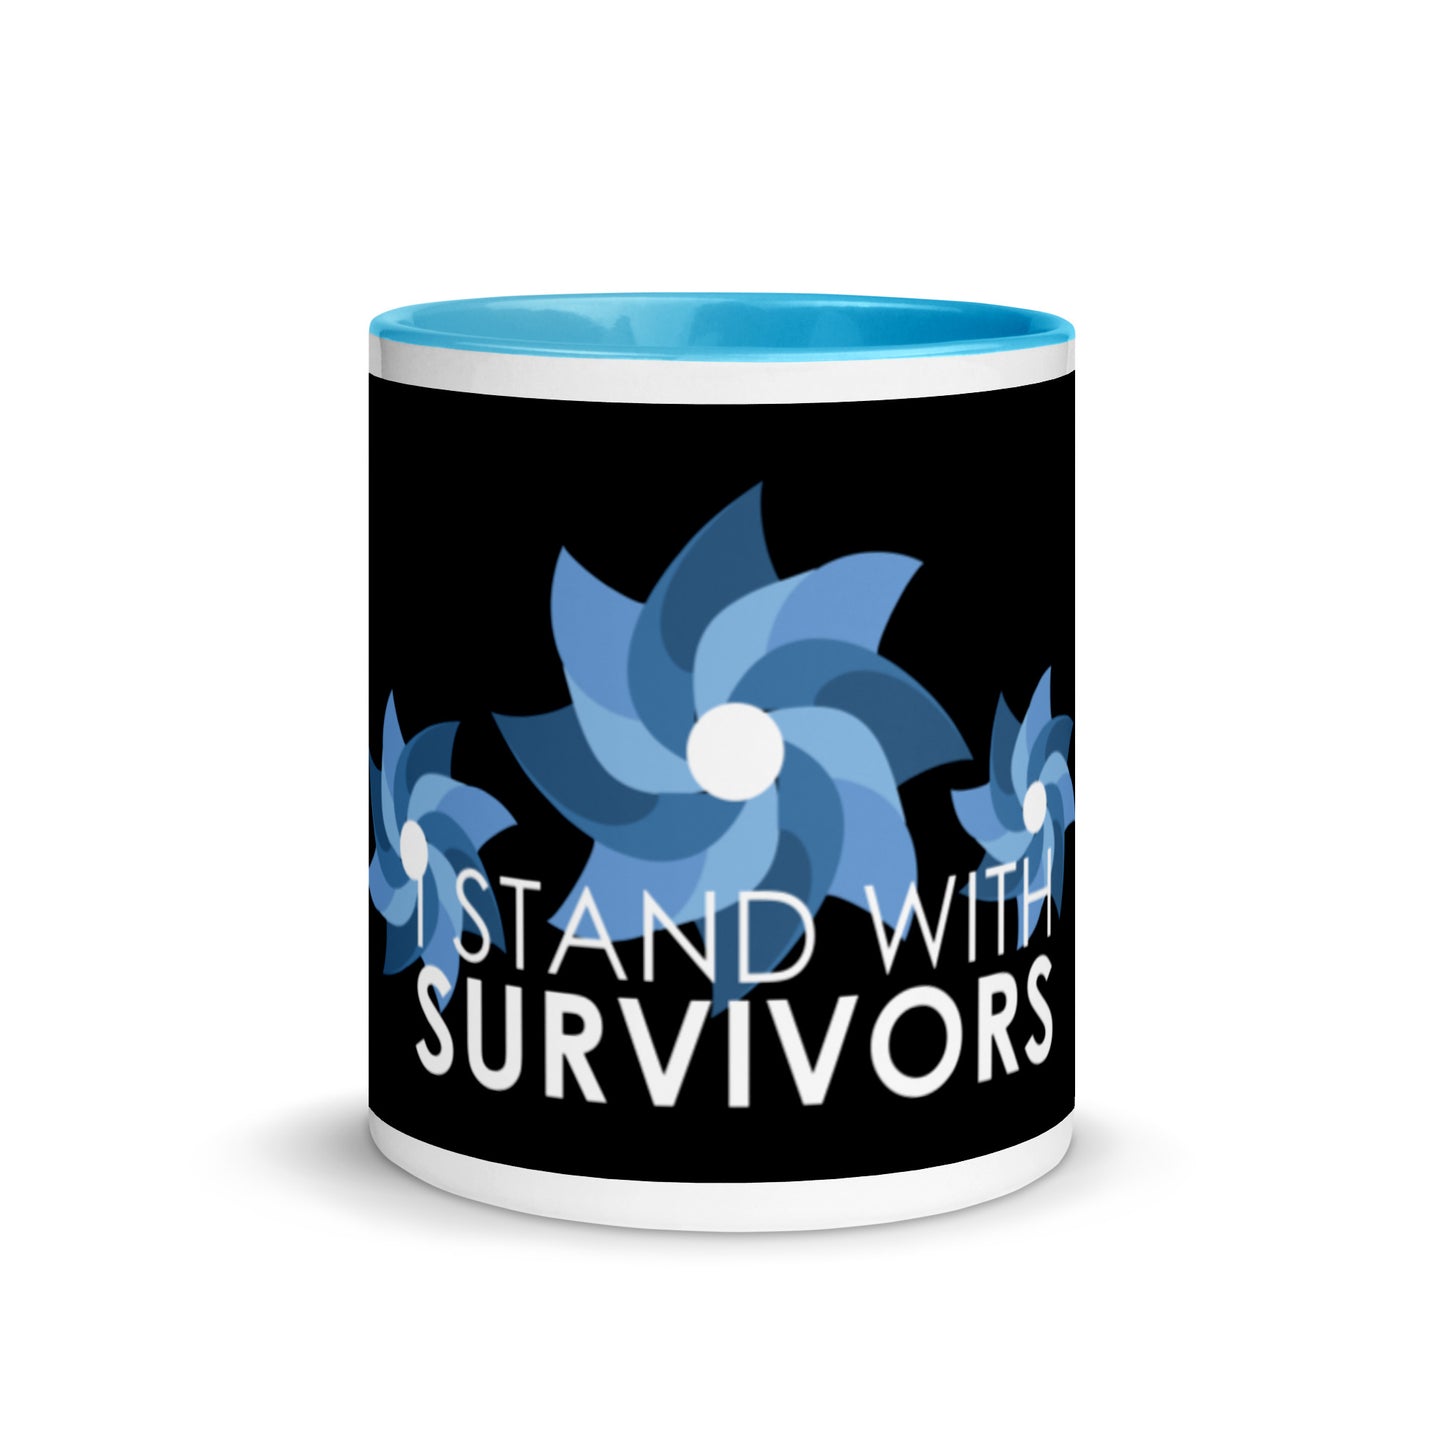 I Stand With Survivors - Colorful Ceramic Mug